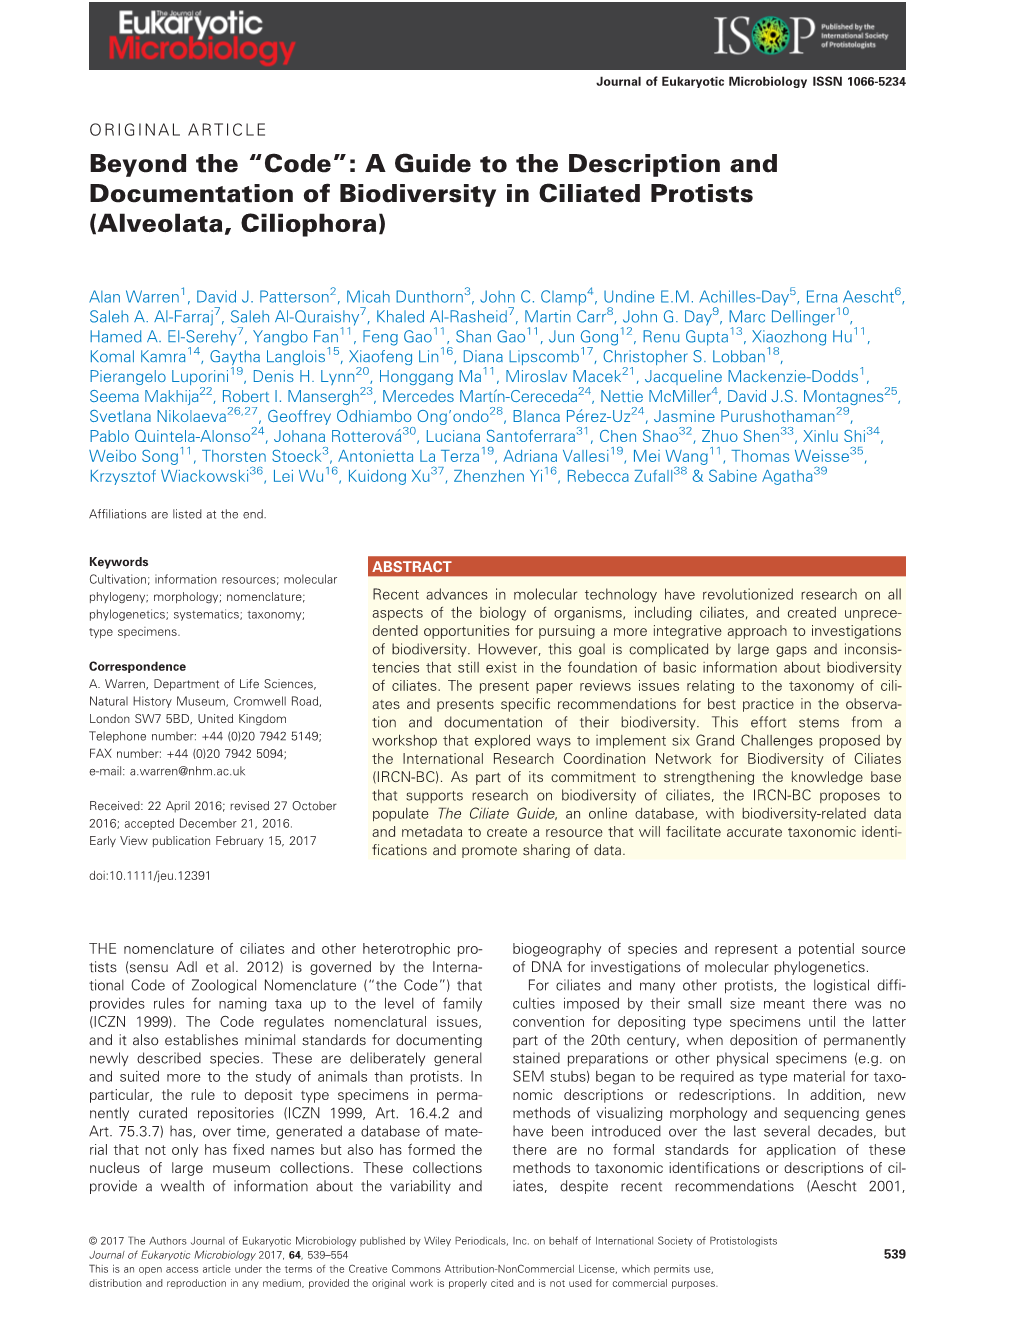 “Code”: a Guide to the Description and Documentation of Biodiversity in Ciliated Protists (Alveolata, Ciliophora)